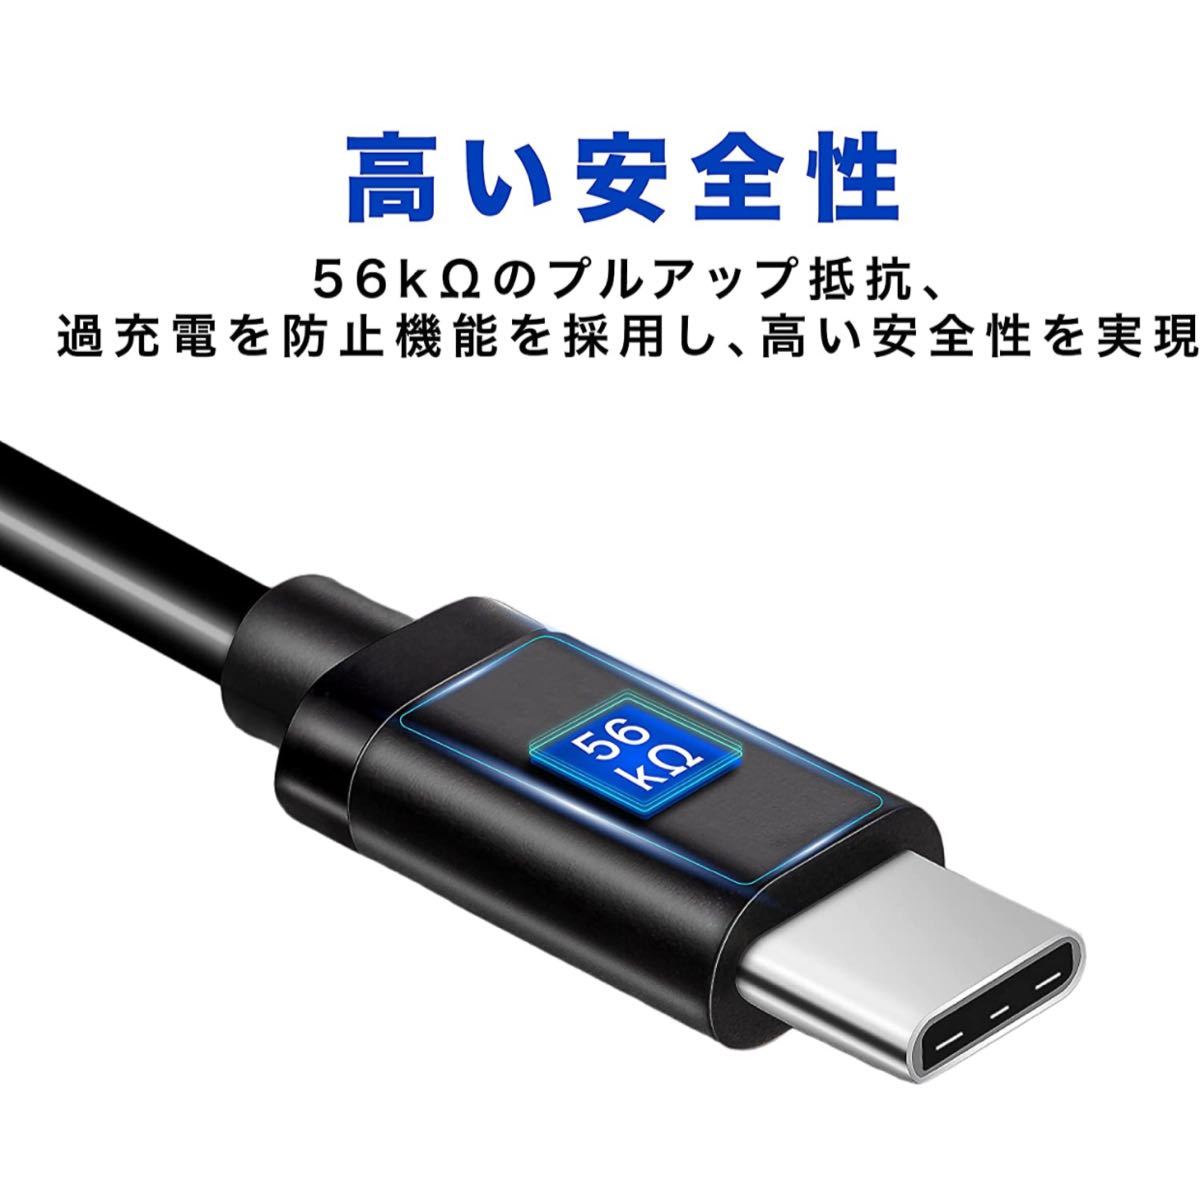 USB Type-C USB-C to USB A  ケーブル